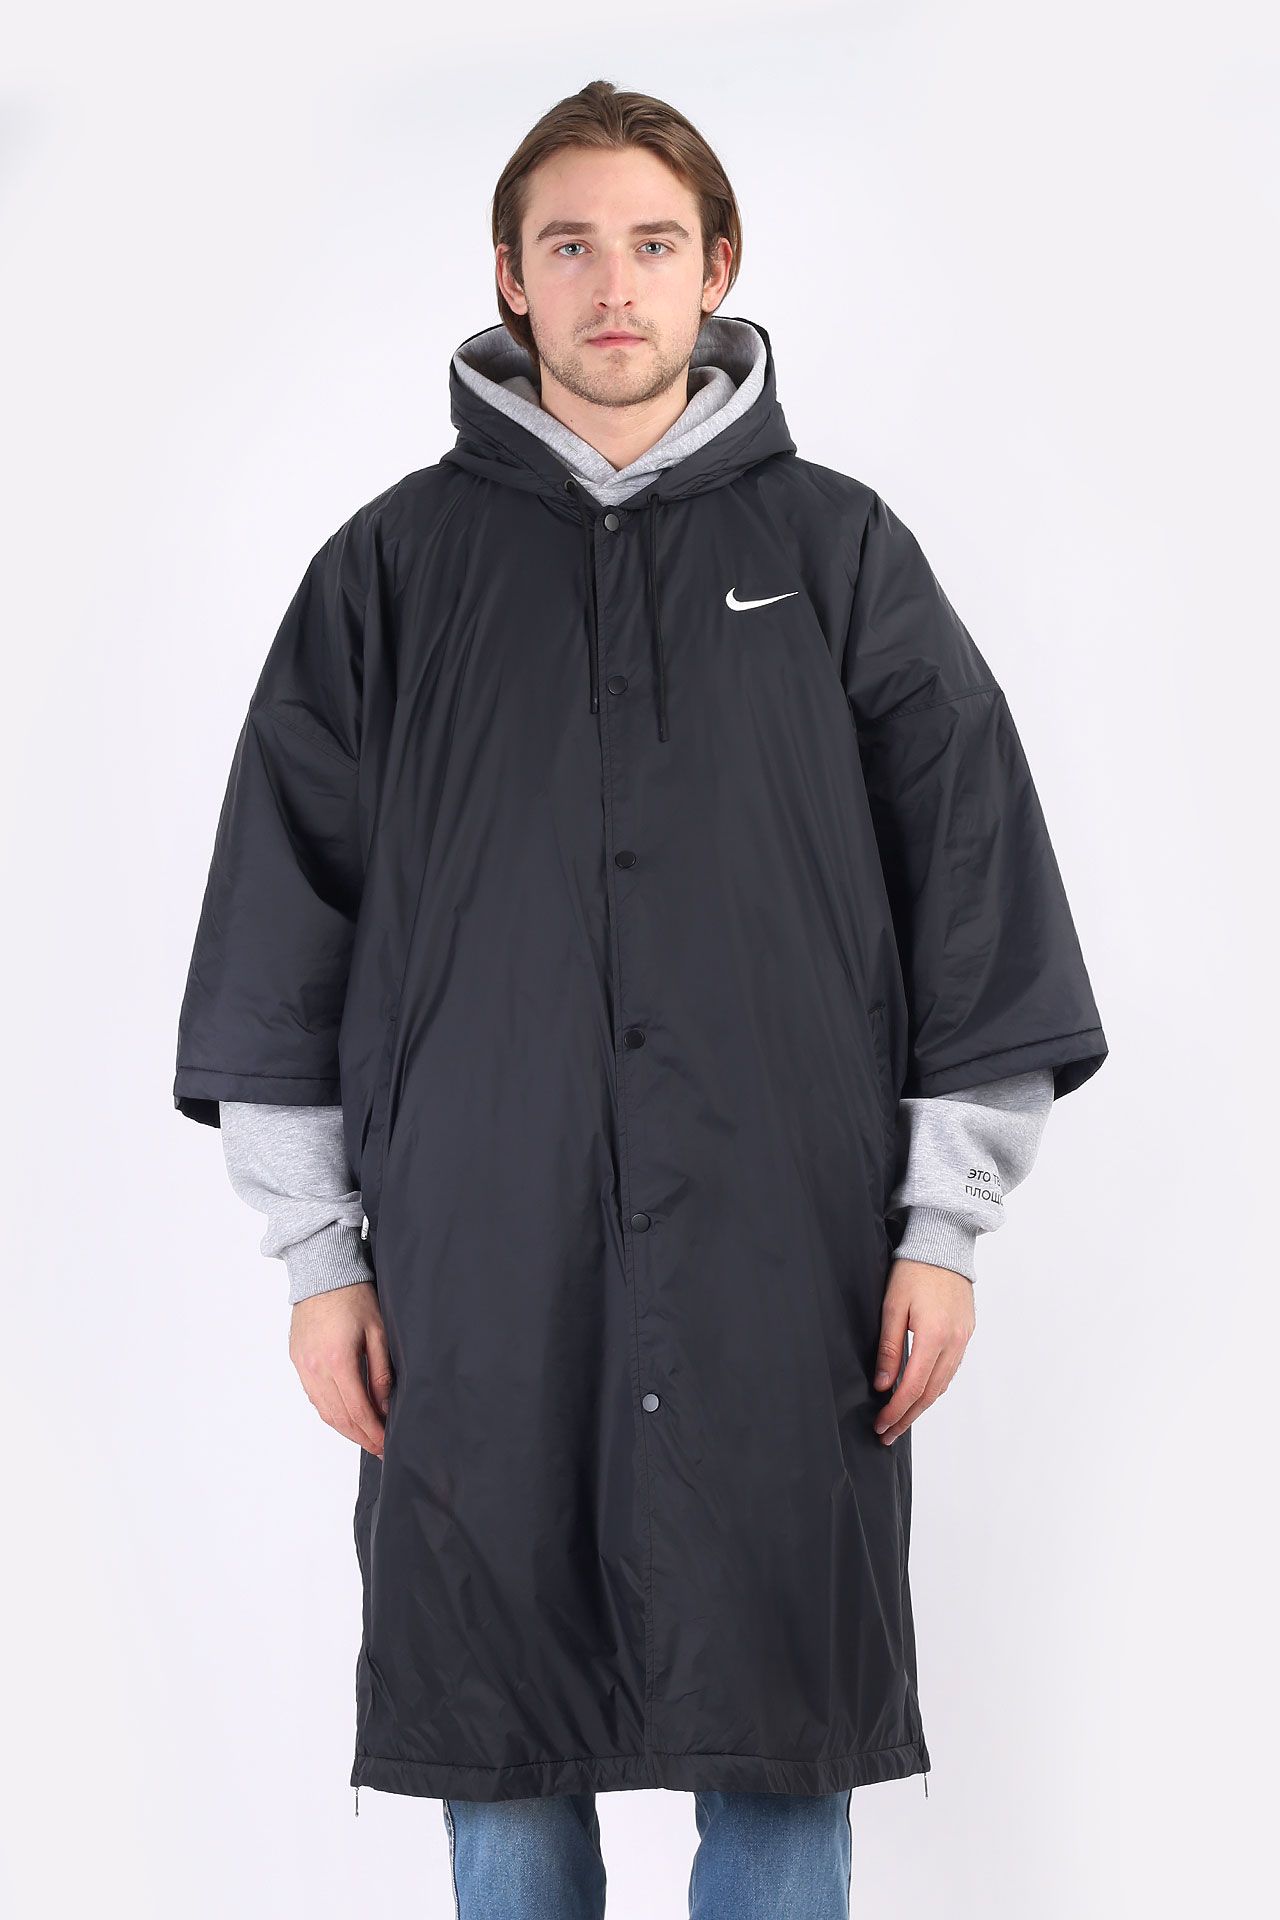 Черная мужская куртка Fear of God Parka от Nike (BV4403-010) по цене 27590  рублей